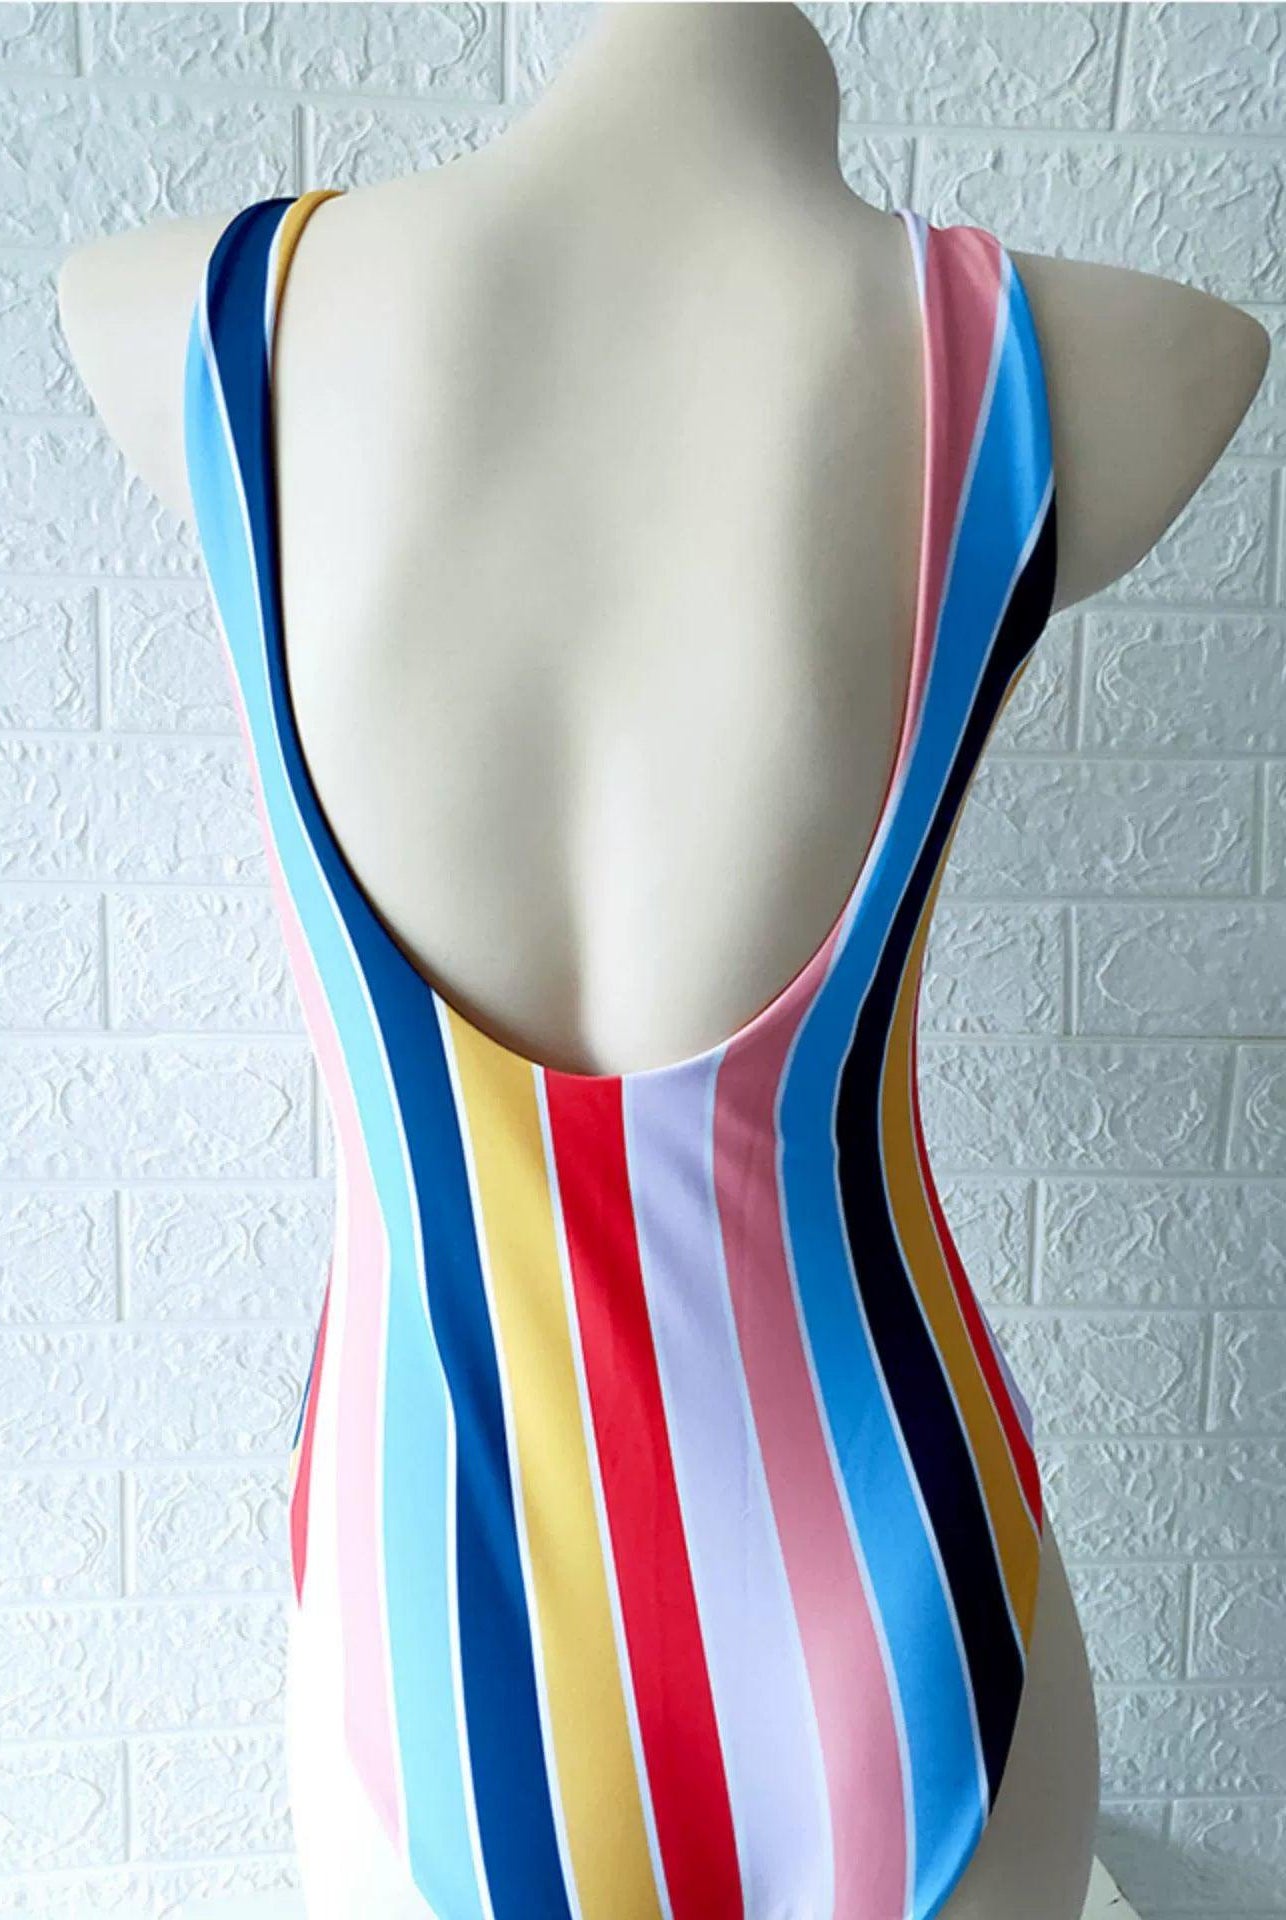  Womens One-Piece Vertical Striped Swimsuit Orange Pink Blue Swimwear